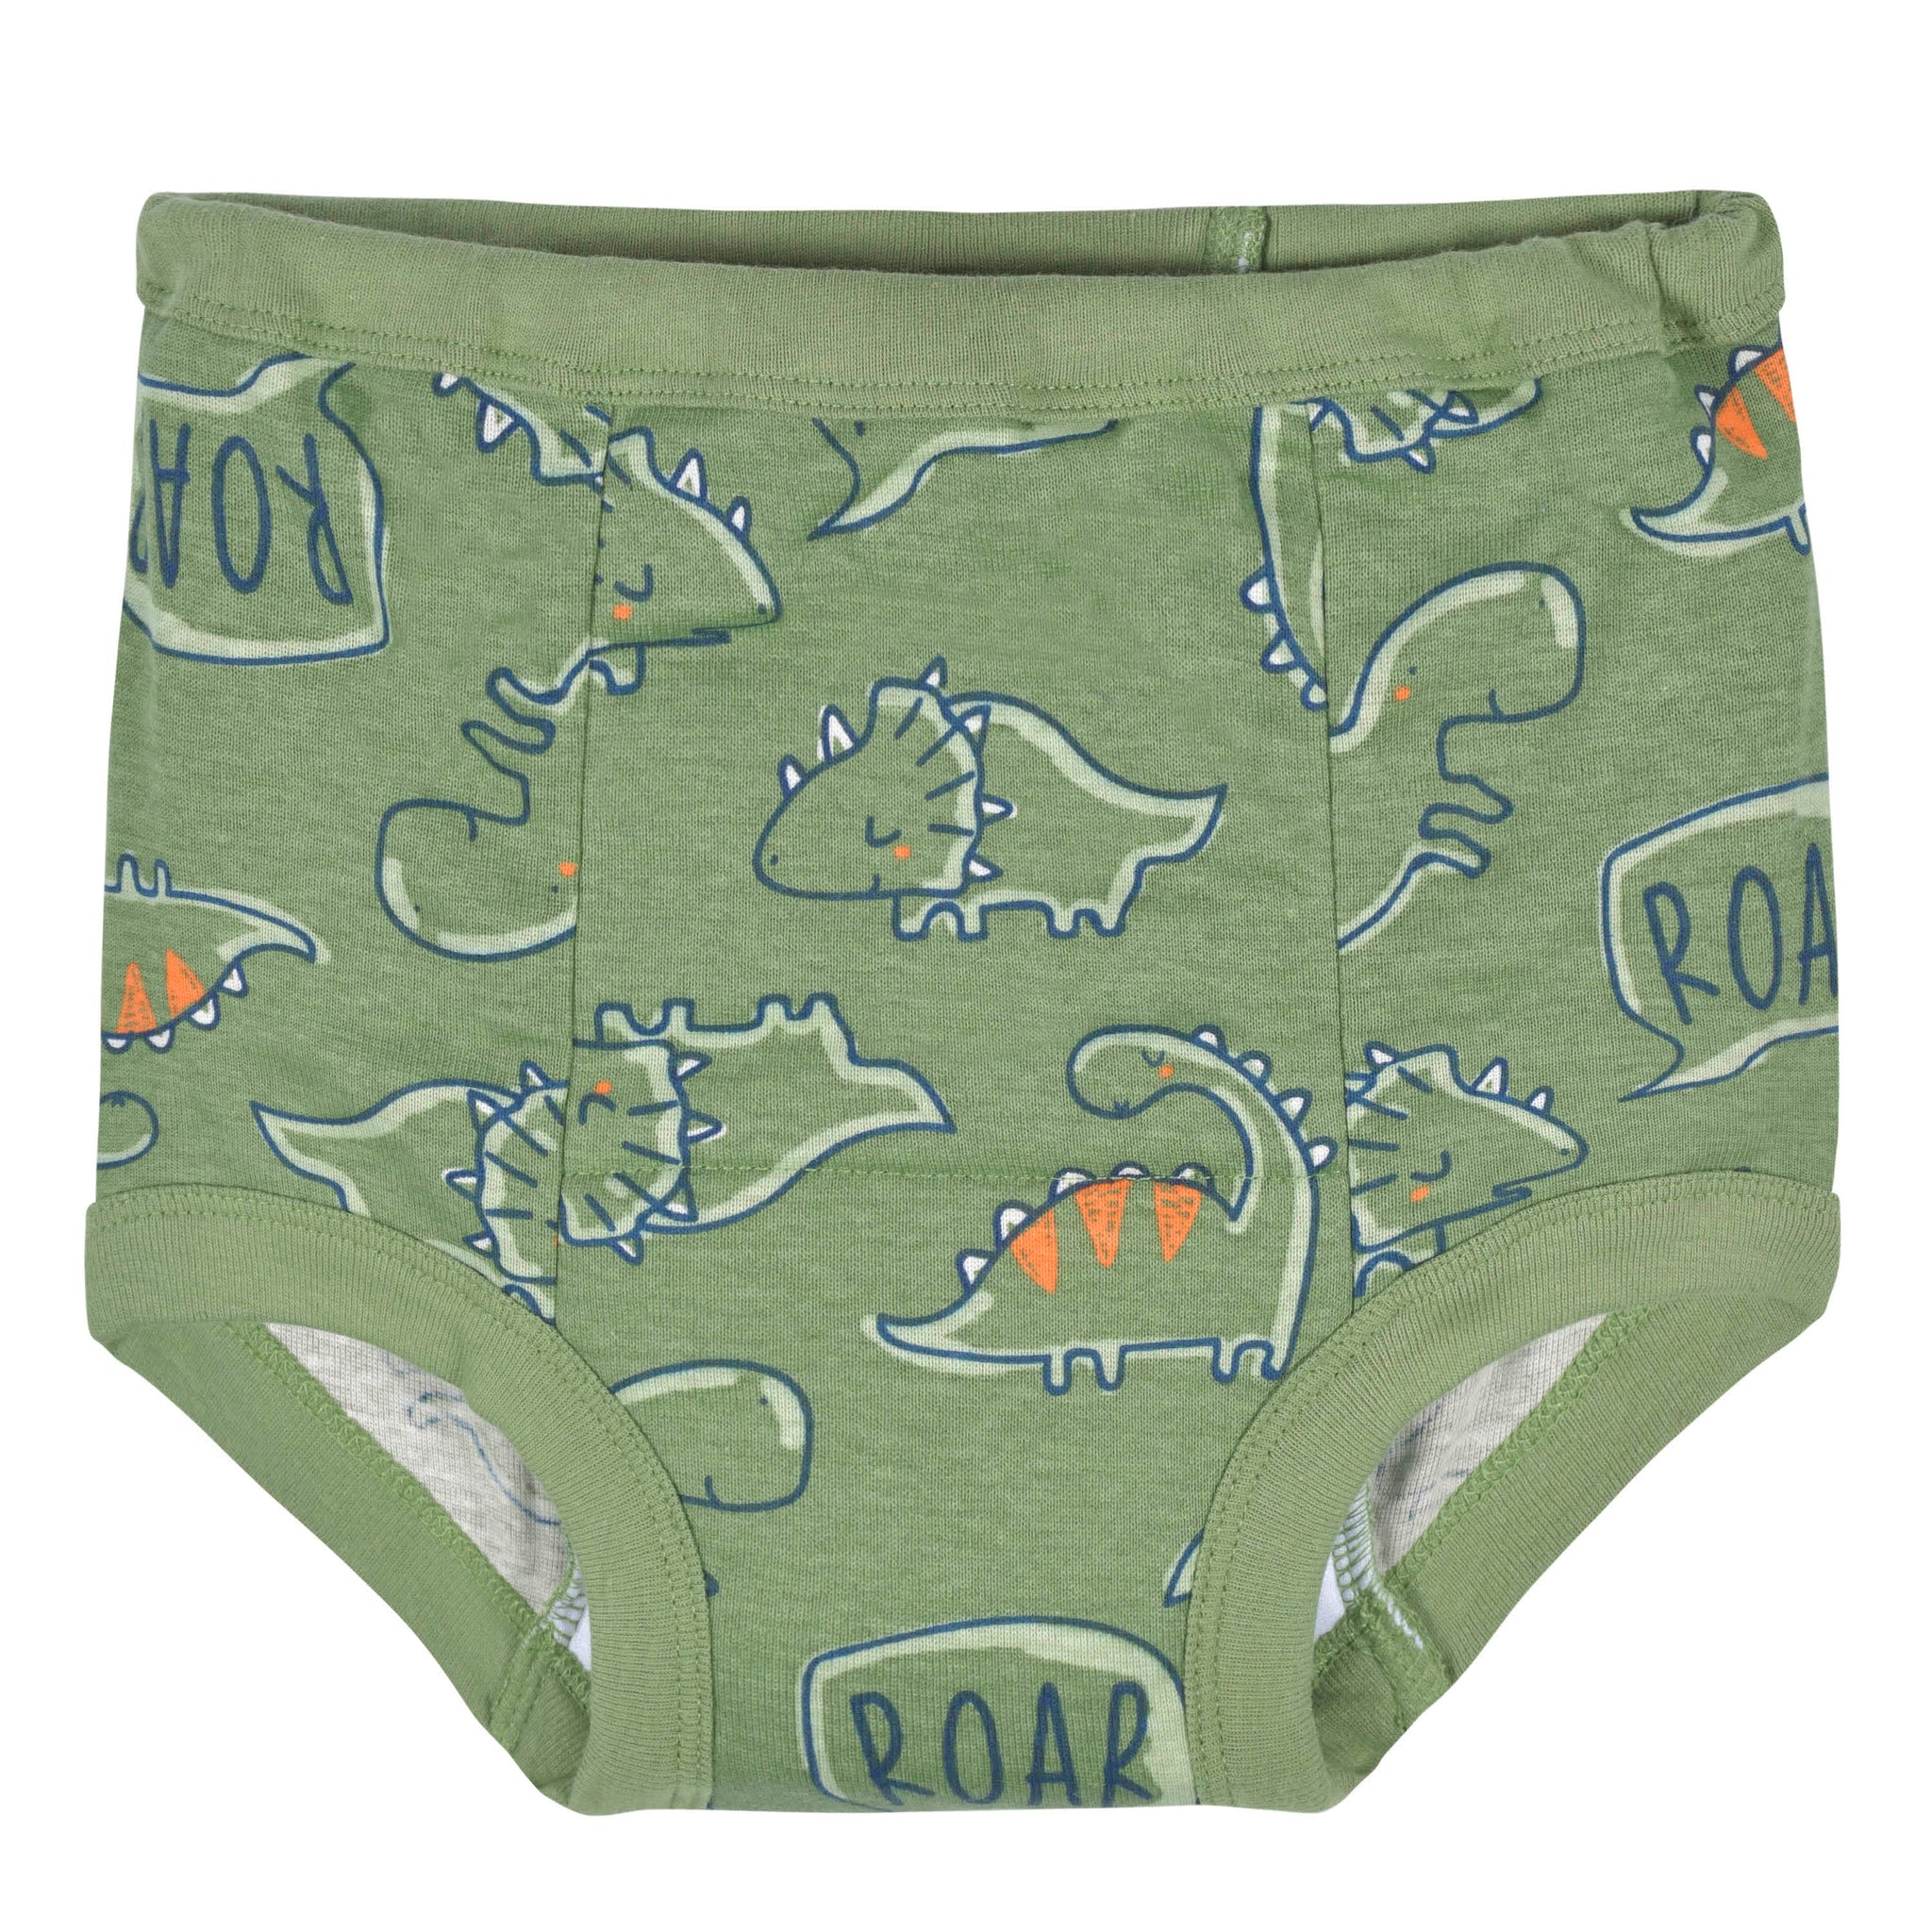 4-Pack Toddler Boys Dinosaur Training Pants-Gerber Childrenswear Wholesale